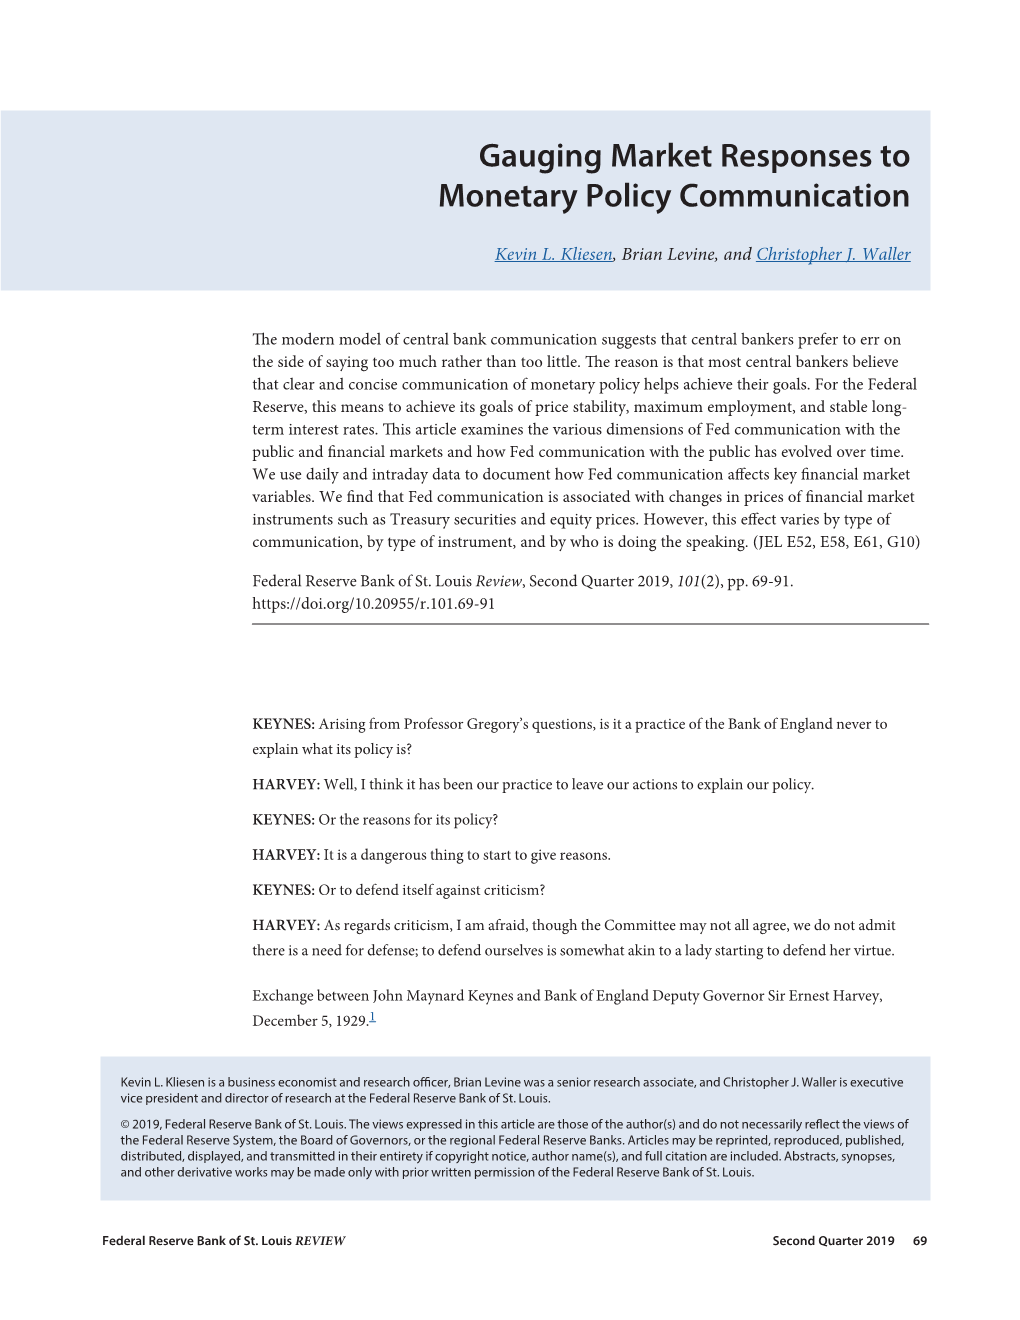 Gauging Market Responses to Monetary Policy Communication